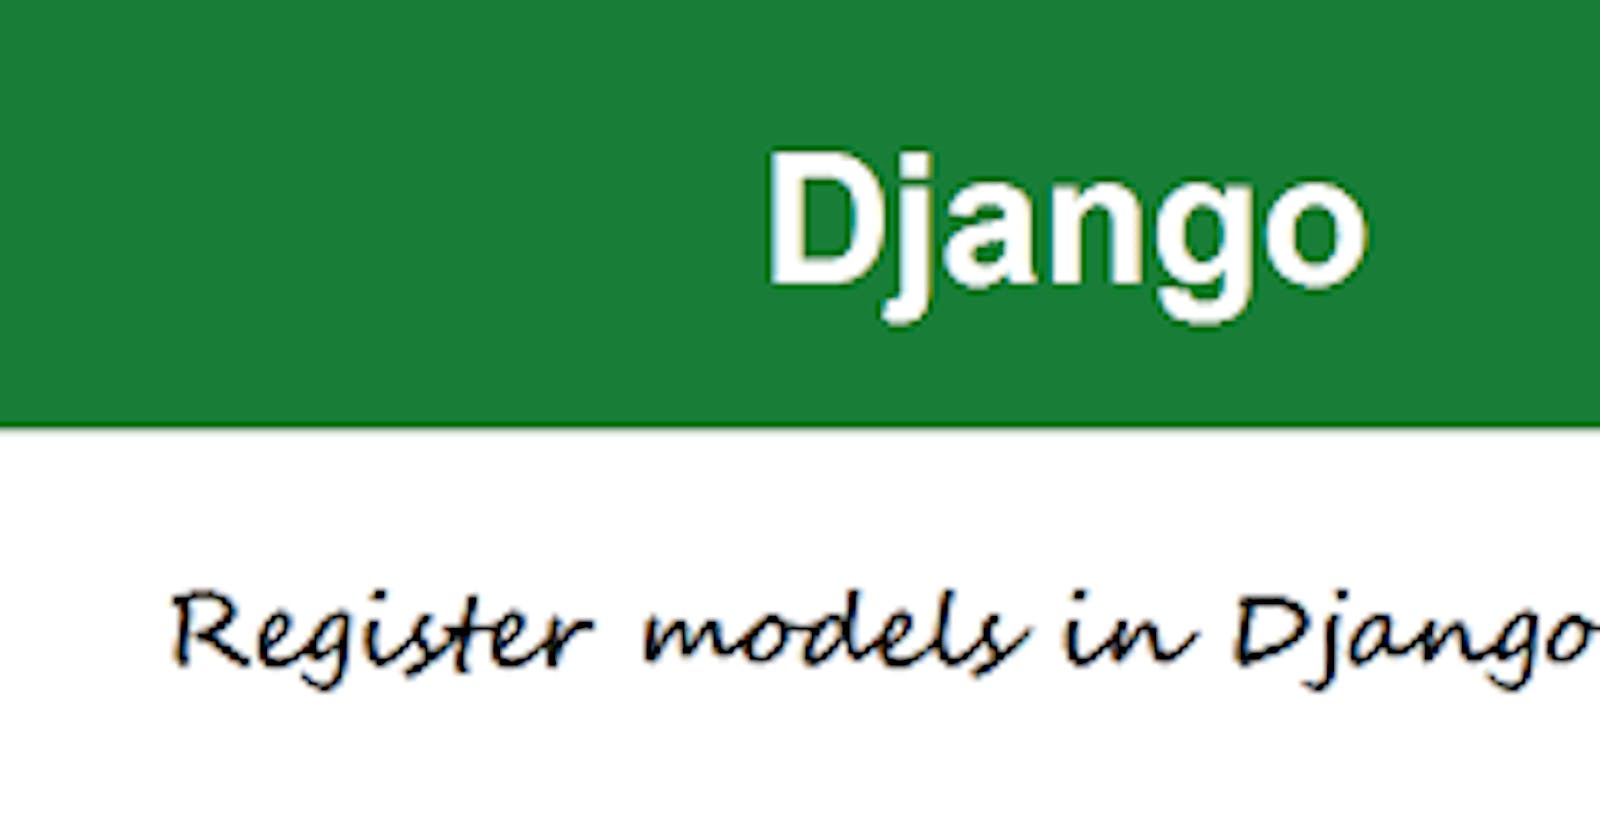 How to register a model in django